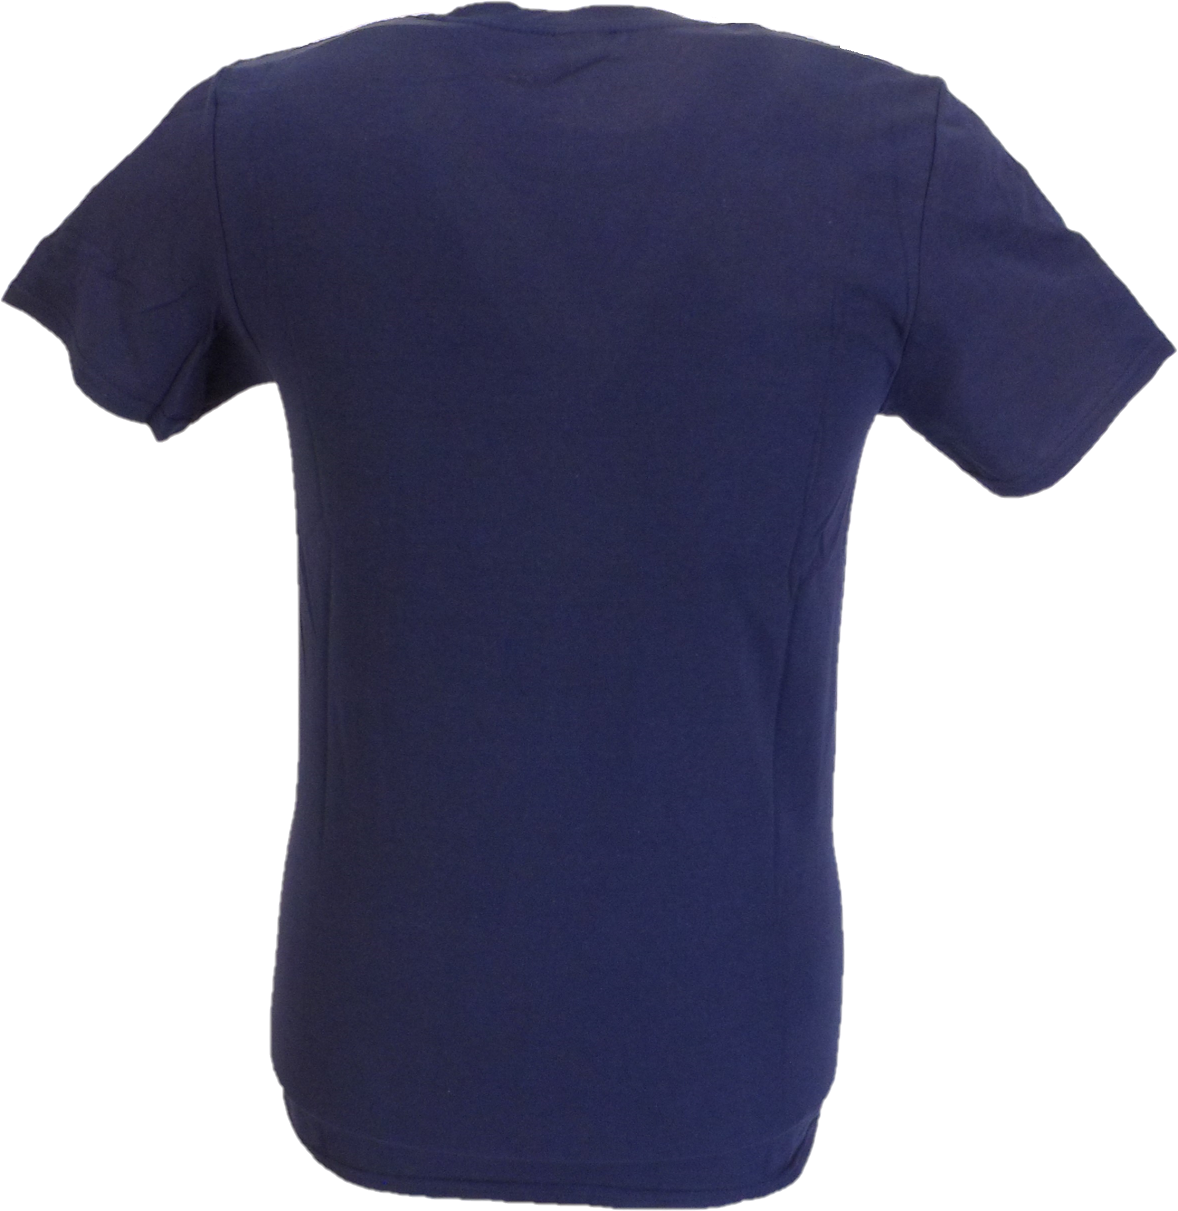 T-shirt ufficiale Madness a righe blu navy da uomo